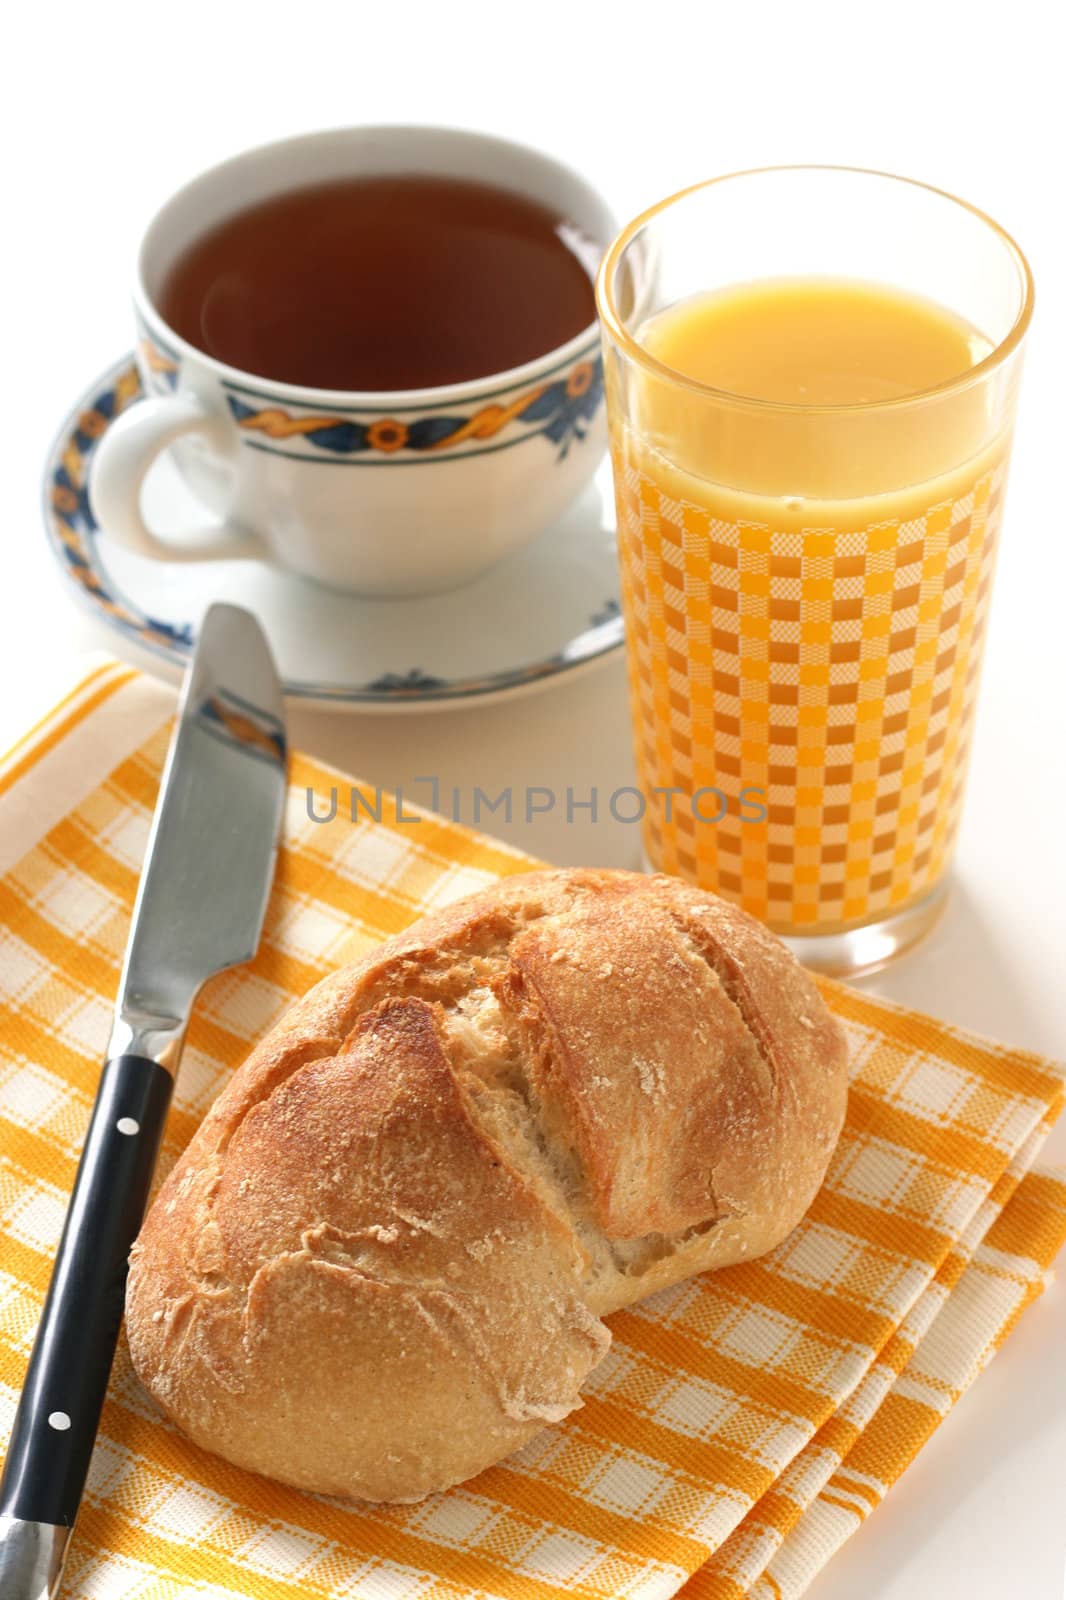 Bread with tea and juice by nataliamylova